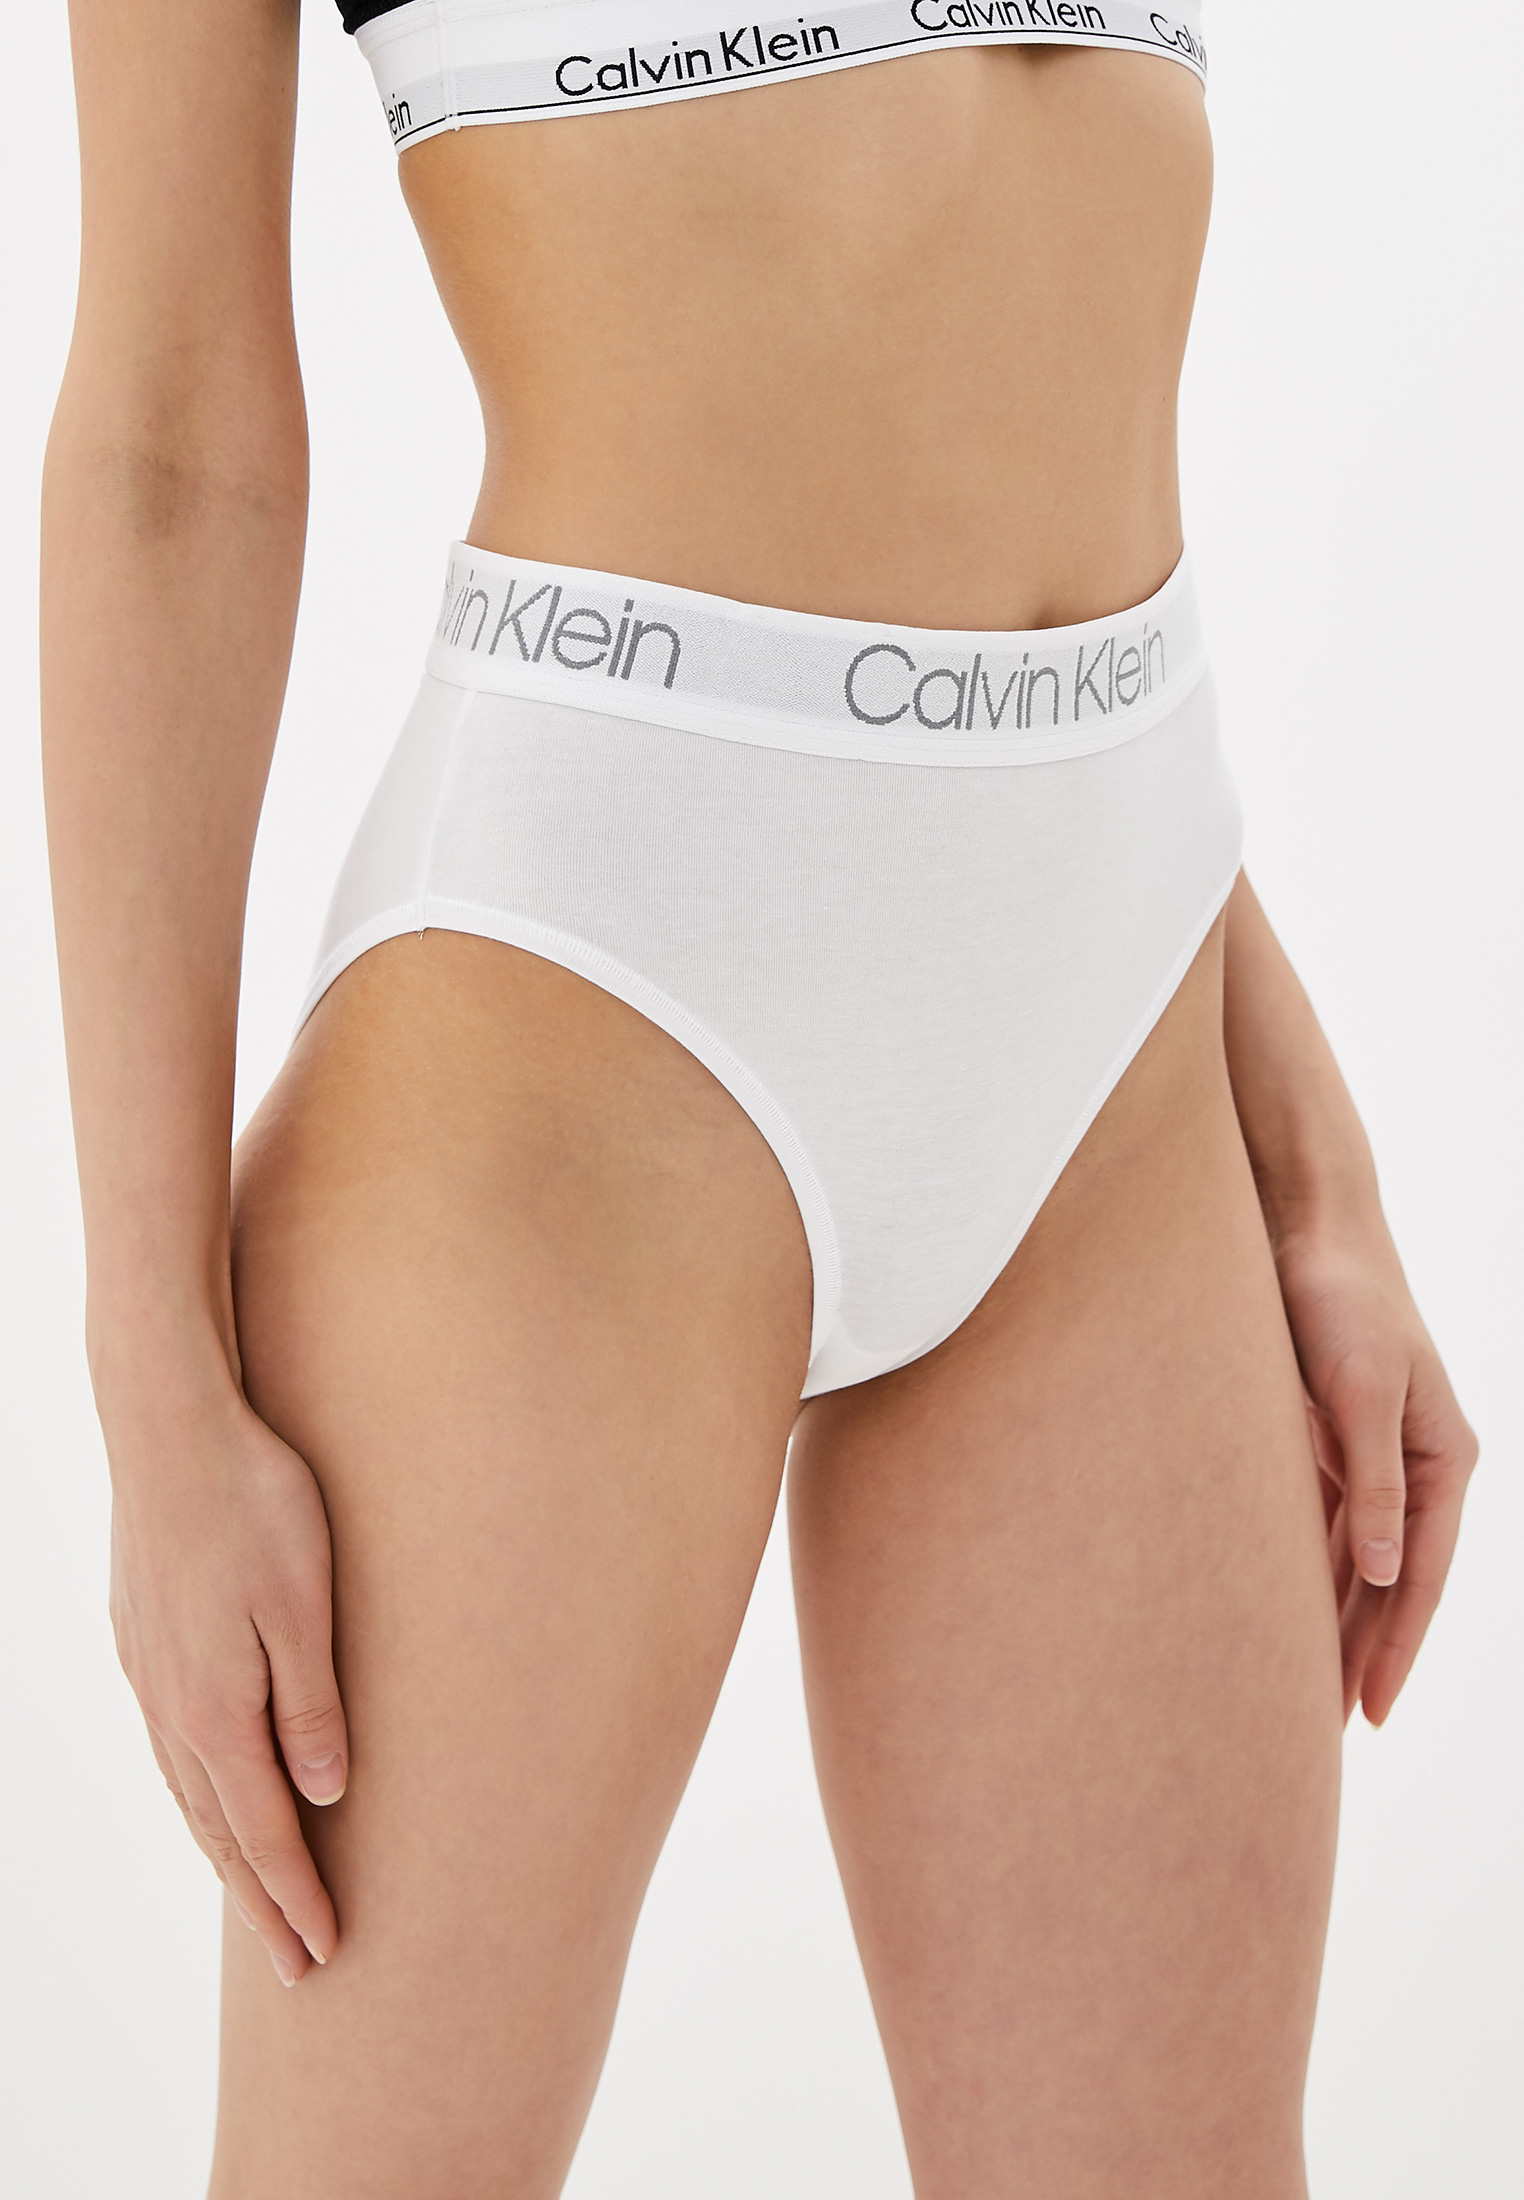 Трусы Calvin Klein Underwear купить за 1100 ₽ в интернет-магазине Lamoda.ru